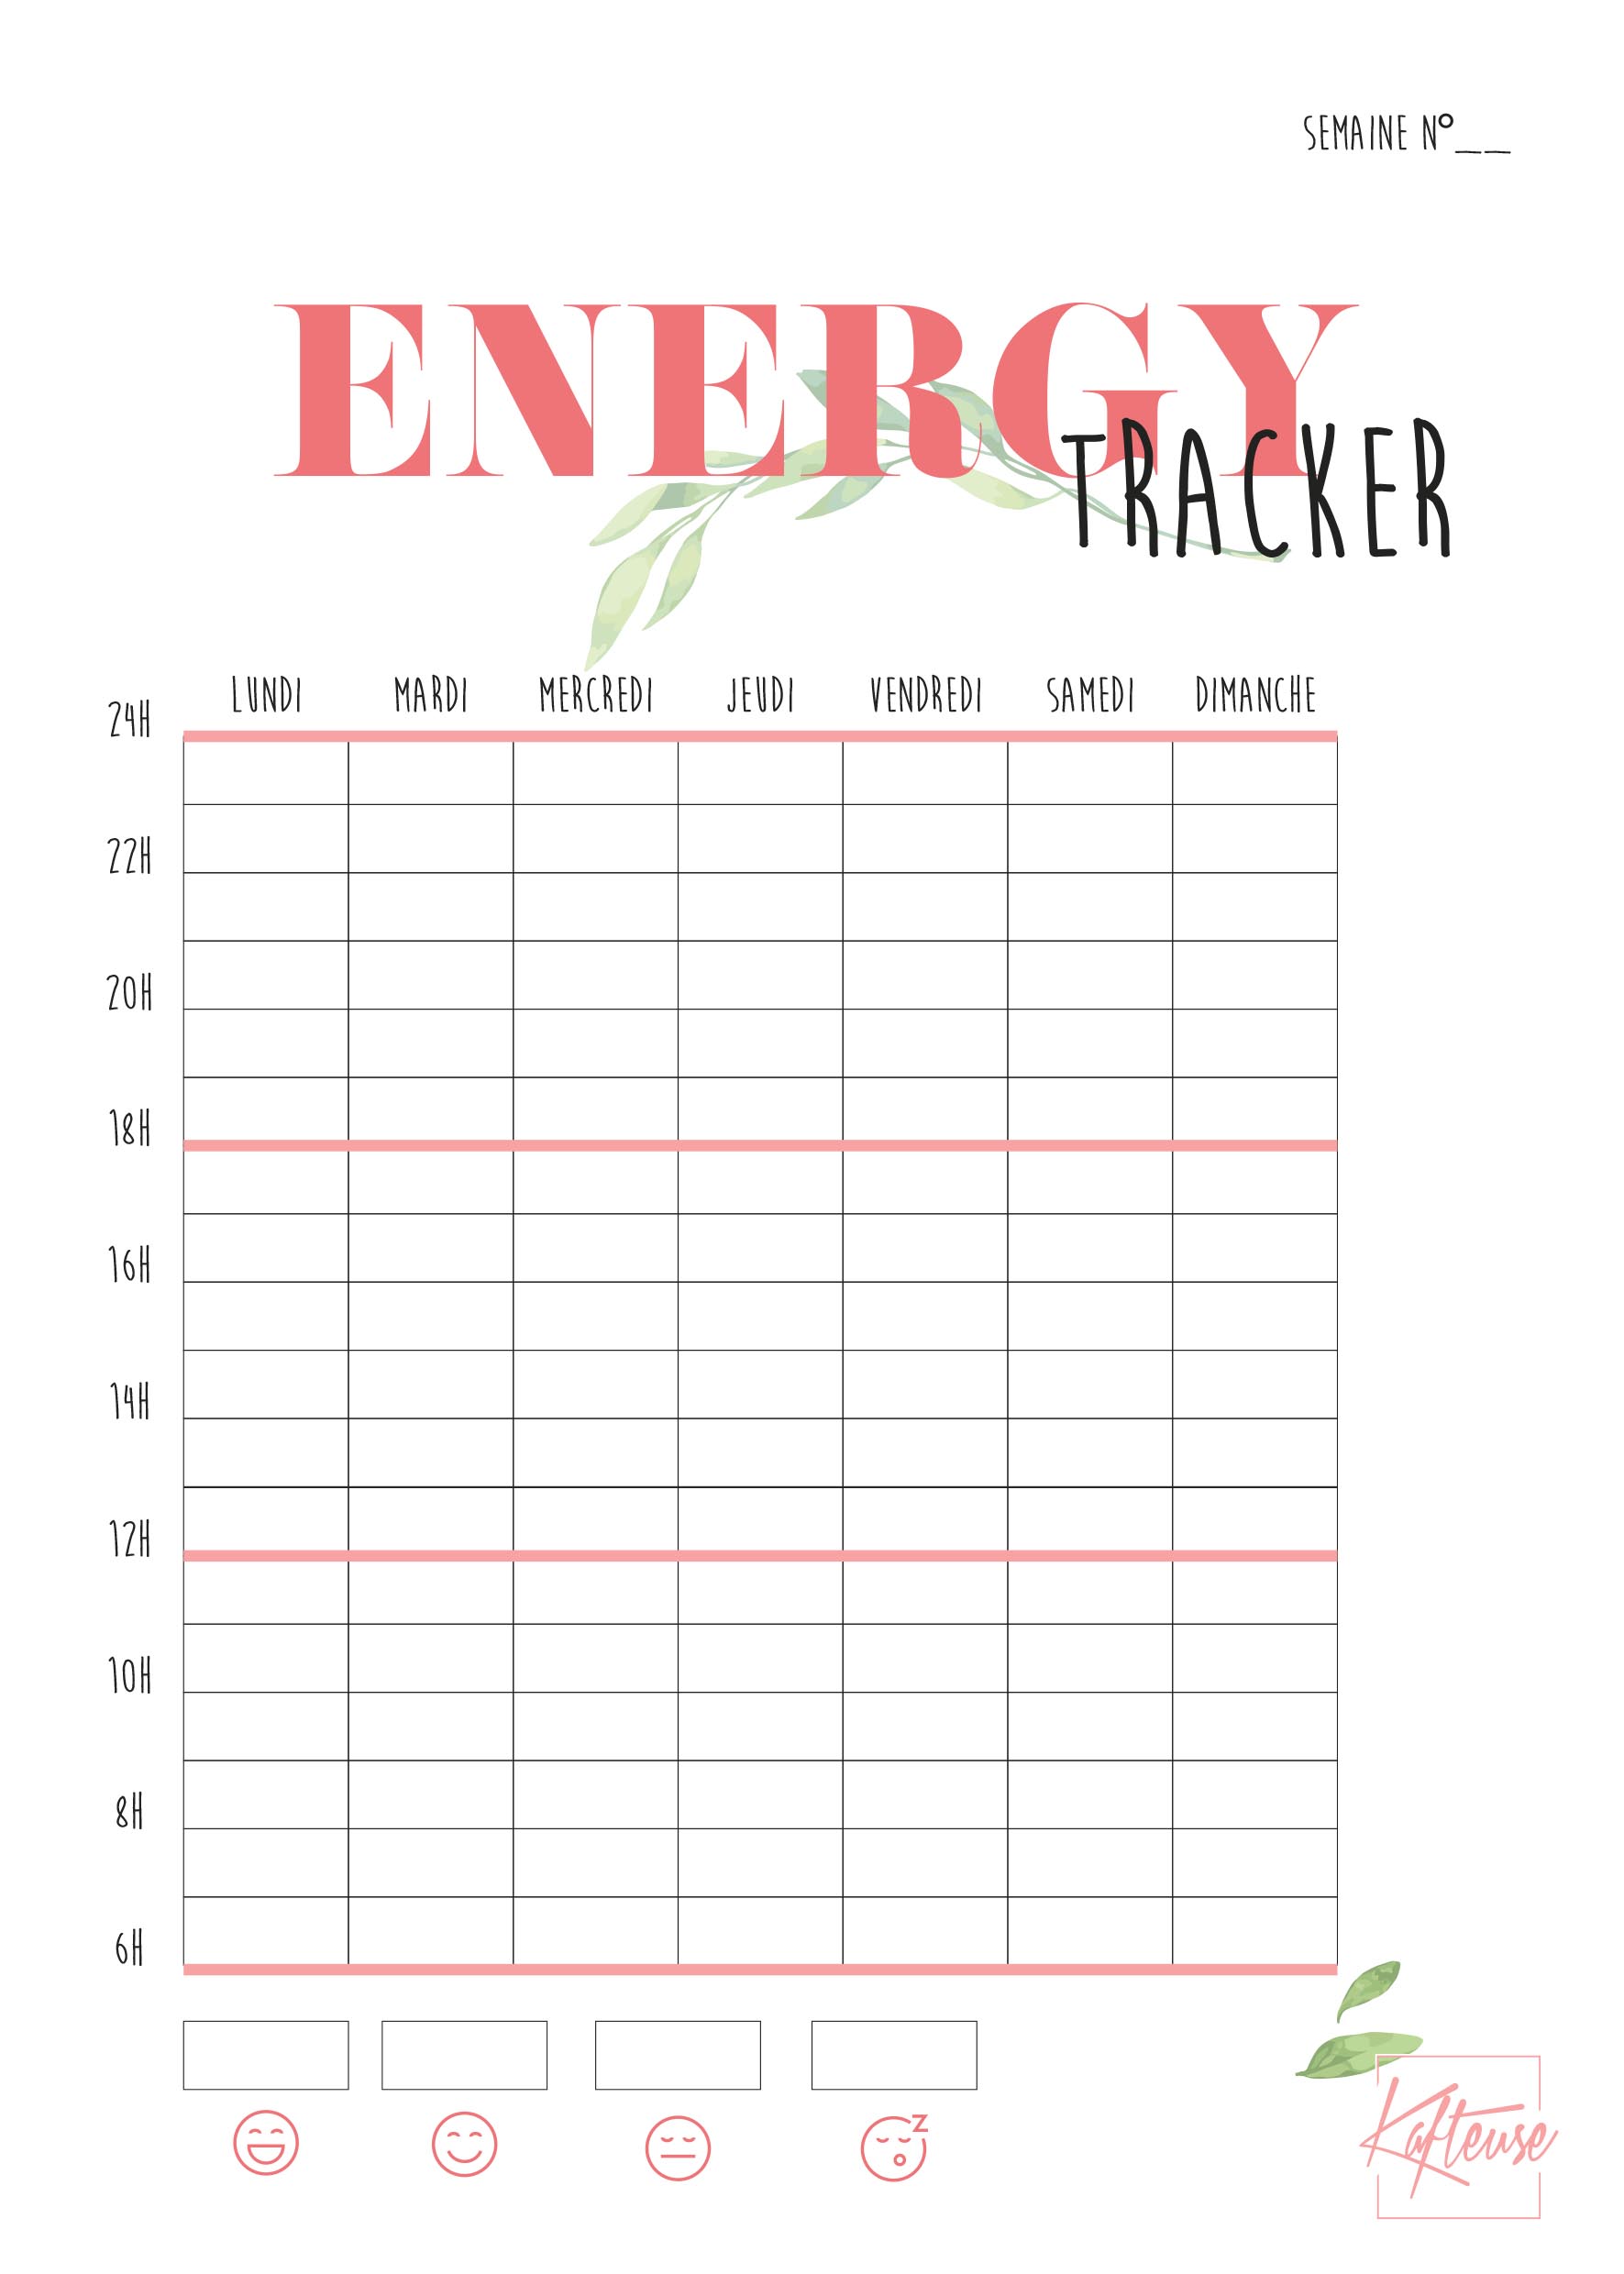 energy tracker - kafteuse